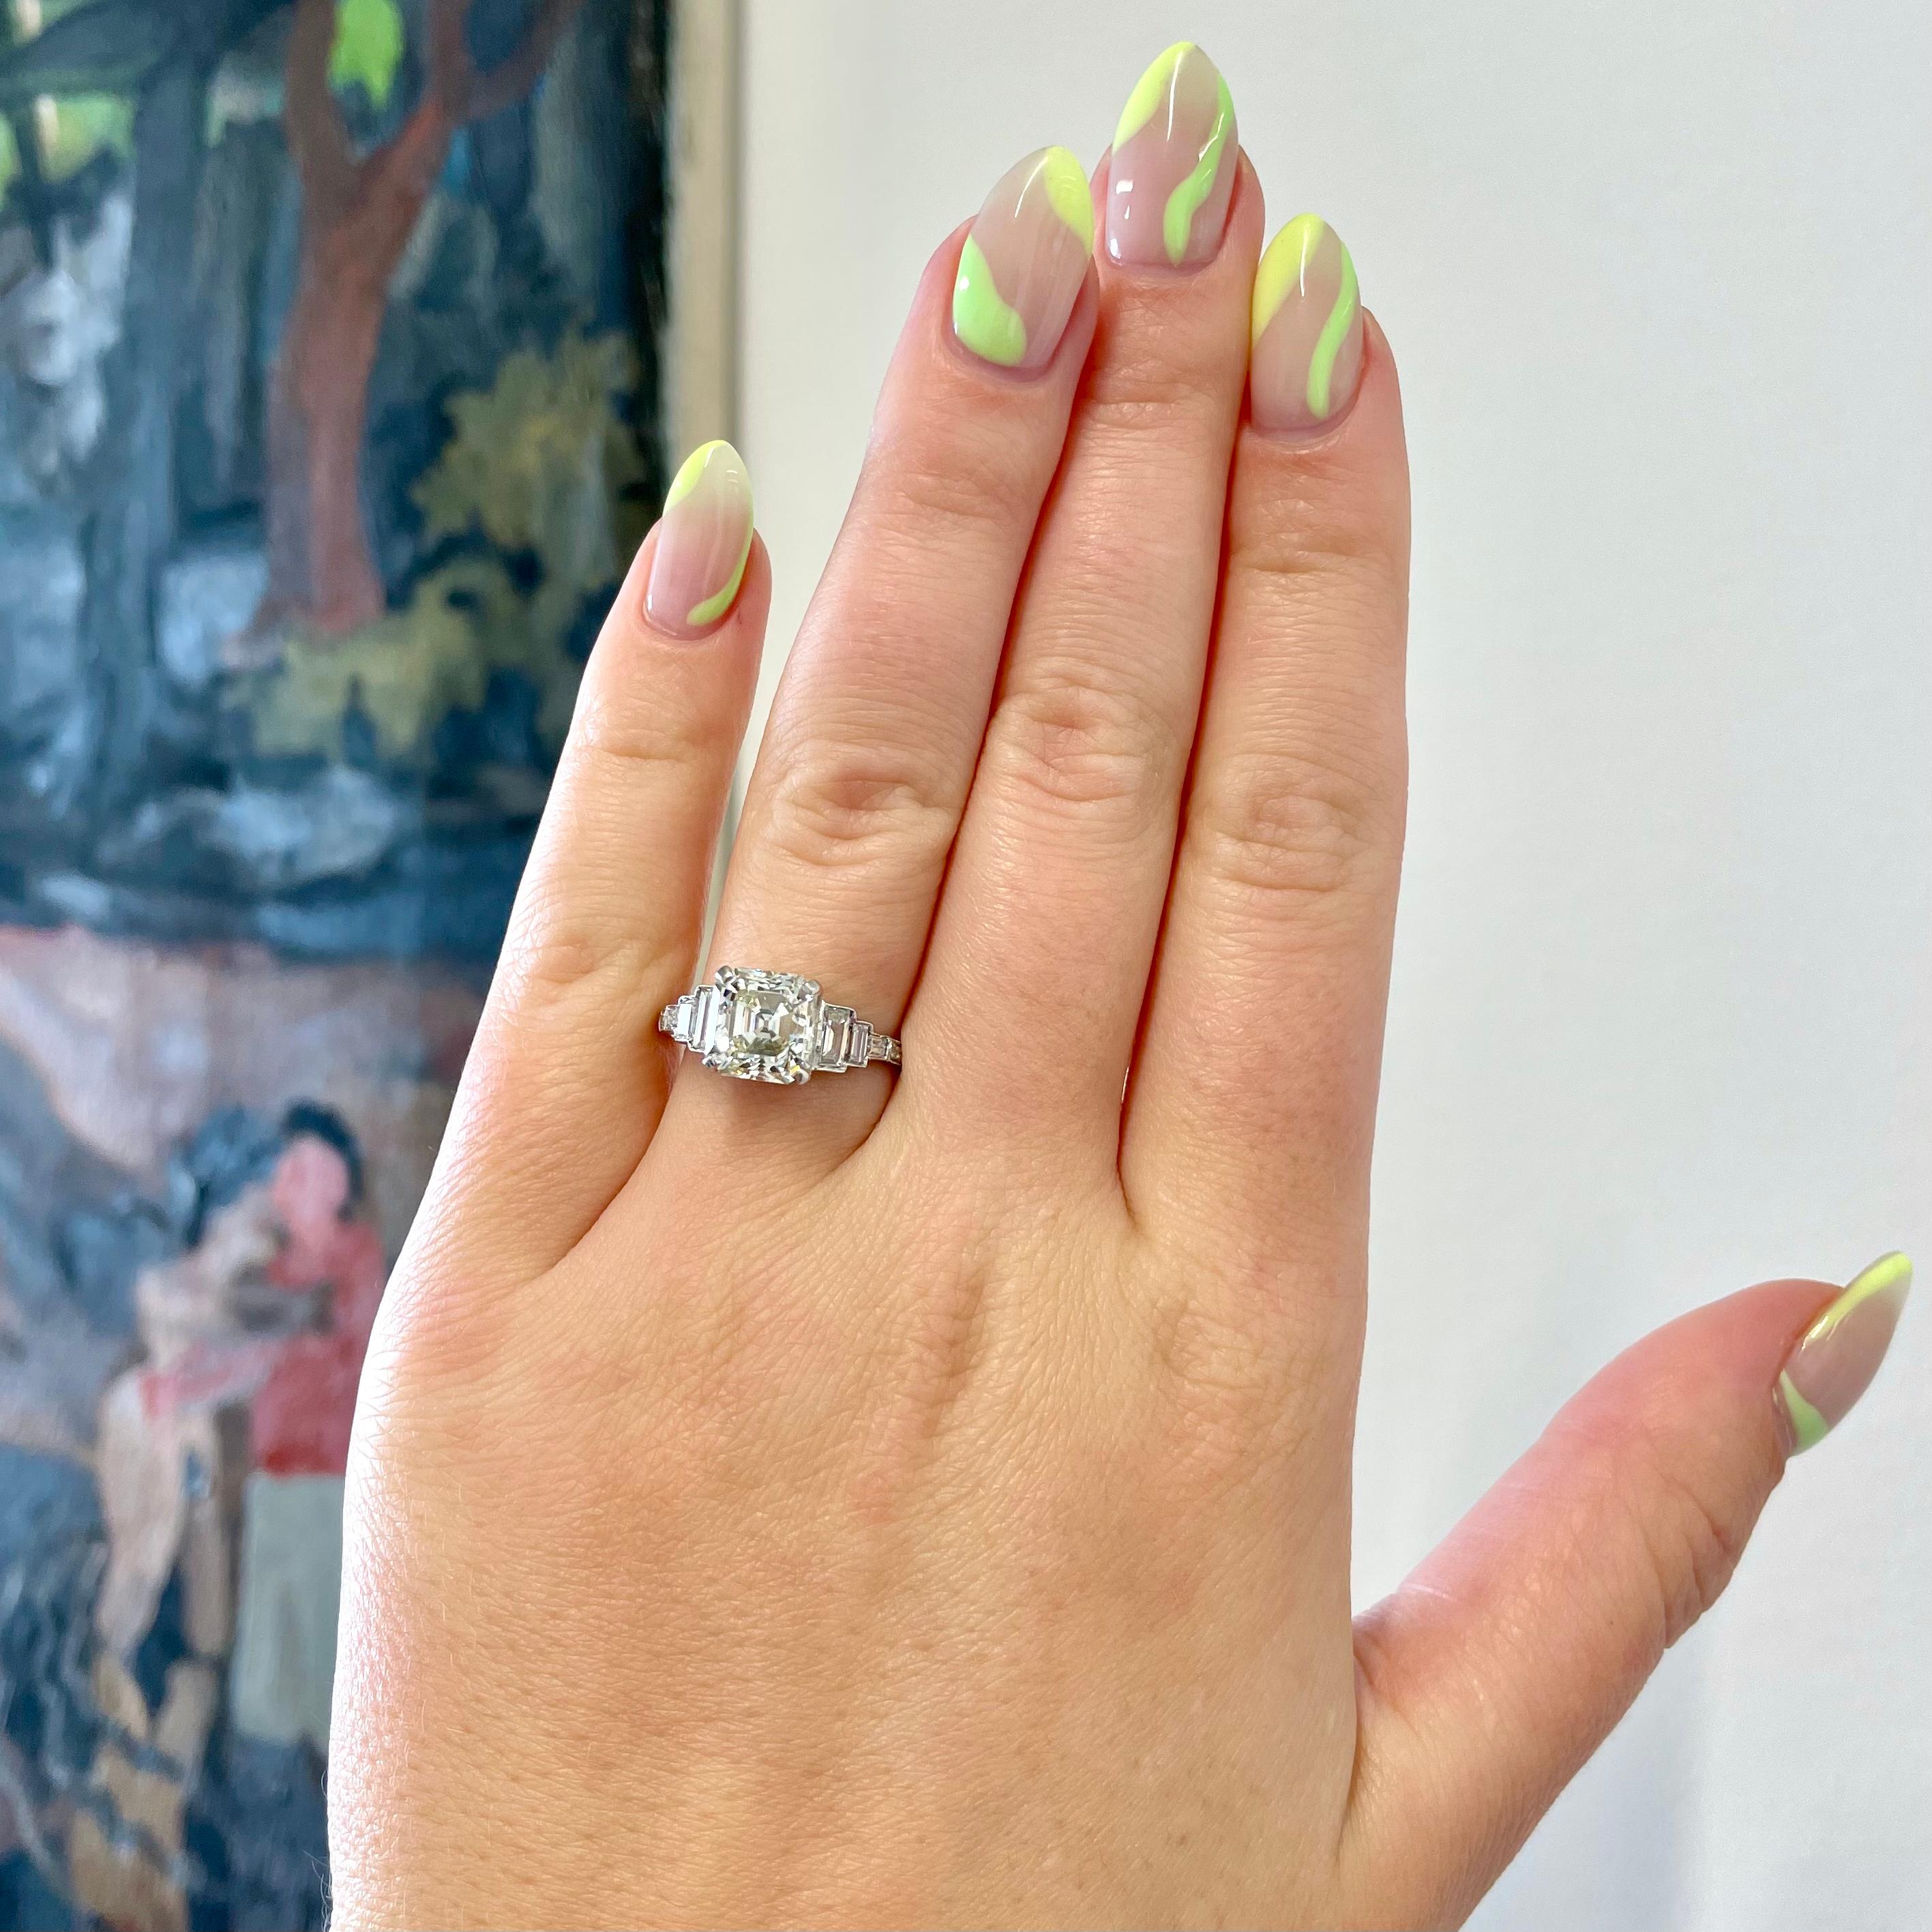 Art Deco Inspired GIA 2.86 Carat Square Emerald Diamond Platinum Engagement Ring. The center diamond is a GIA certified square emerald cut 2.86 carat, L color, VS2 clarity (#6213300294). Accented by 6 baguettes, 4 Round Brilliant Cut diamonds 0.45